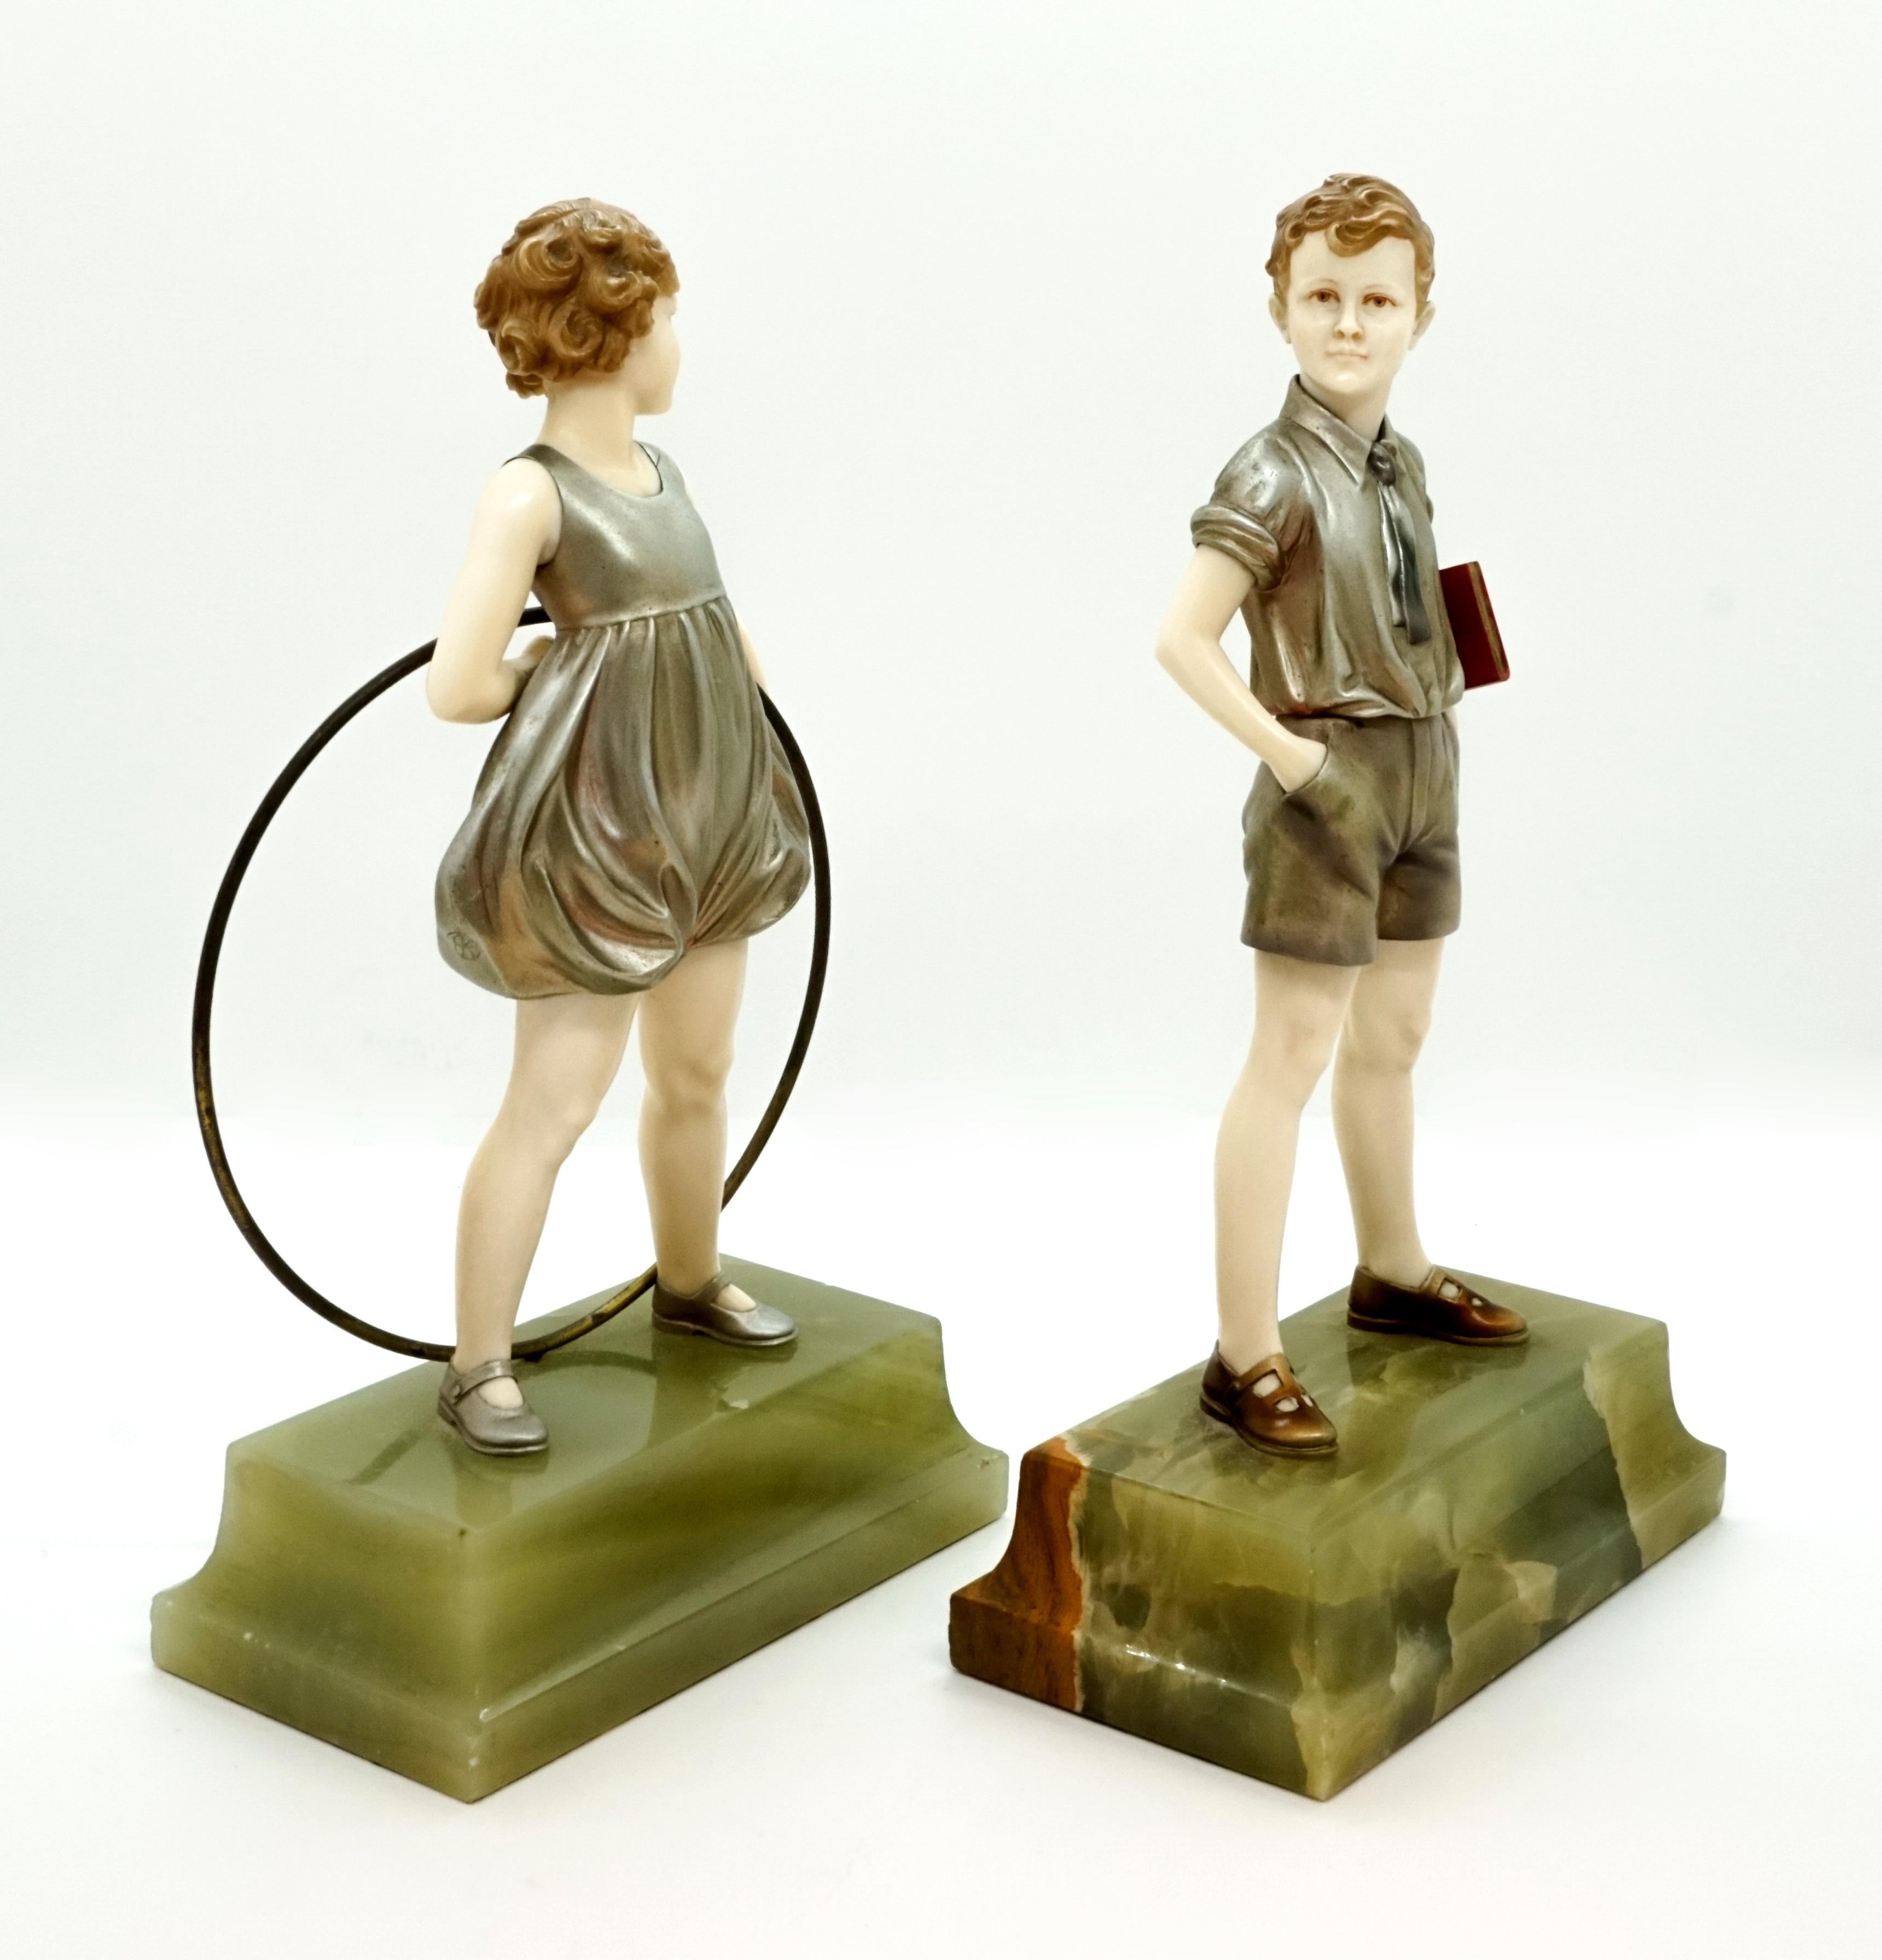 ferdinand figurines